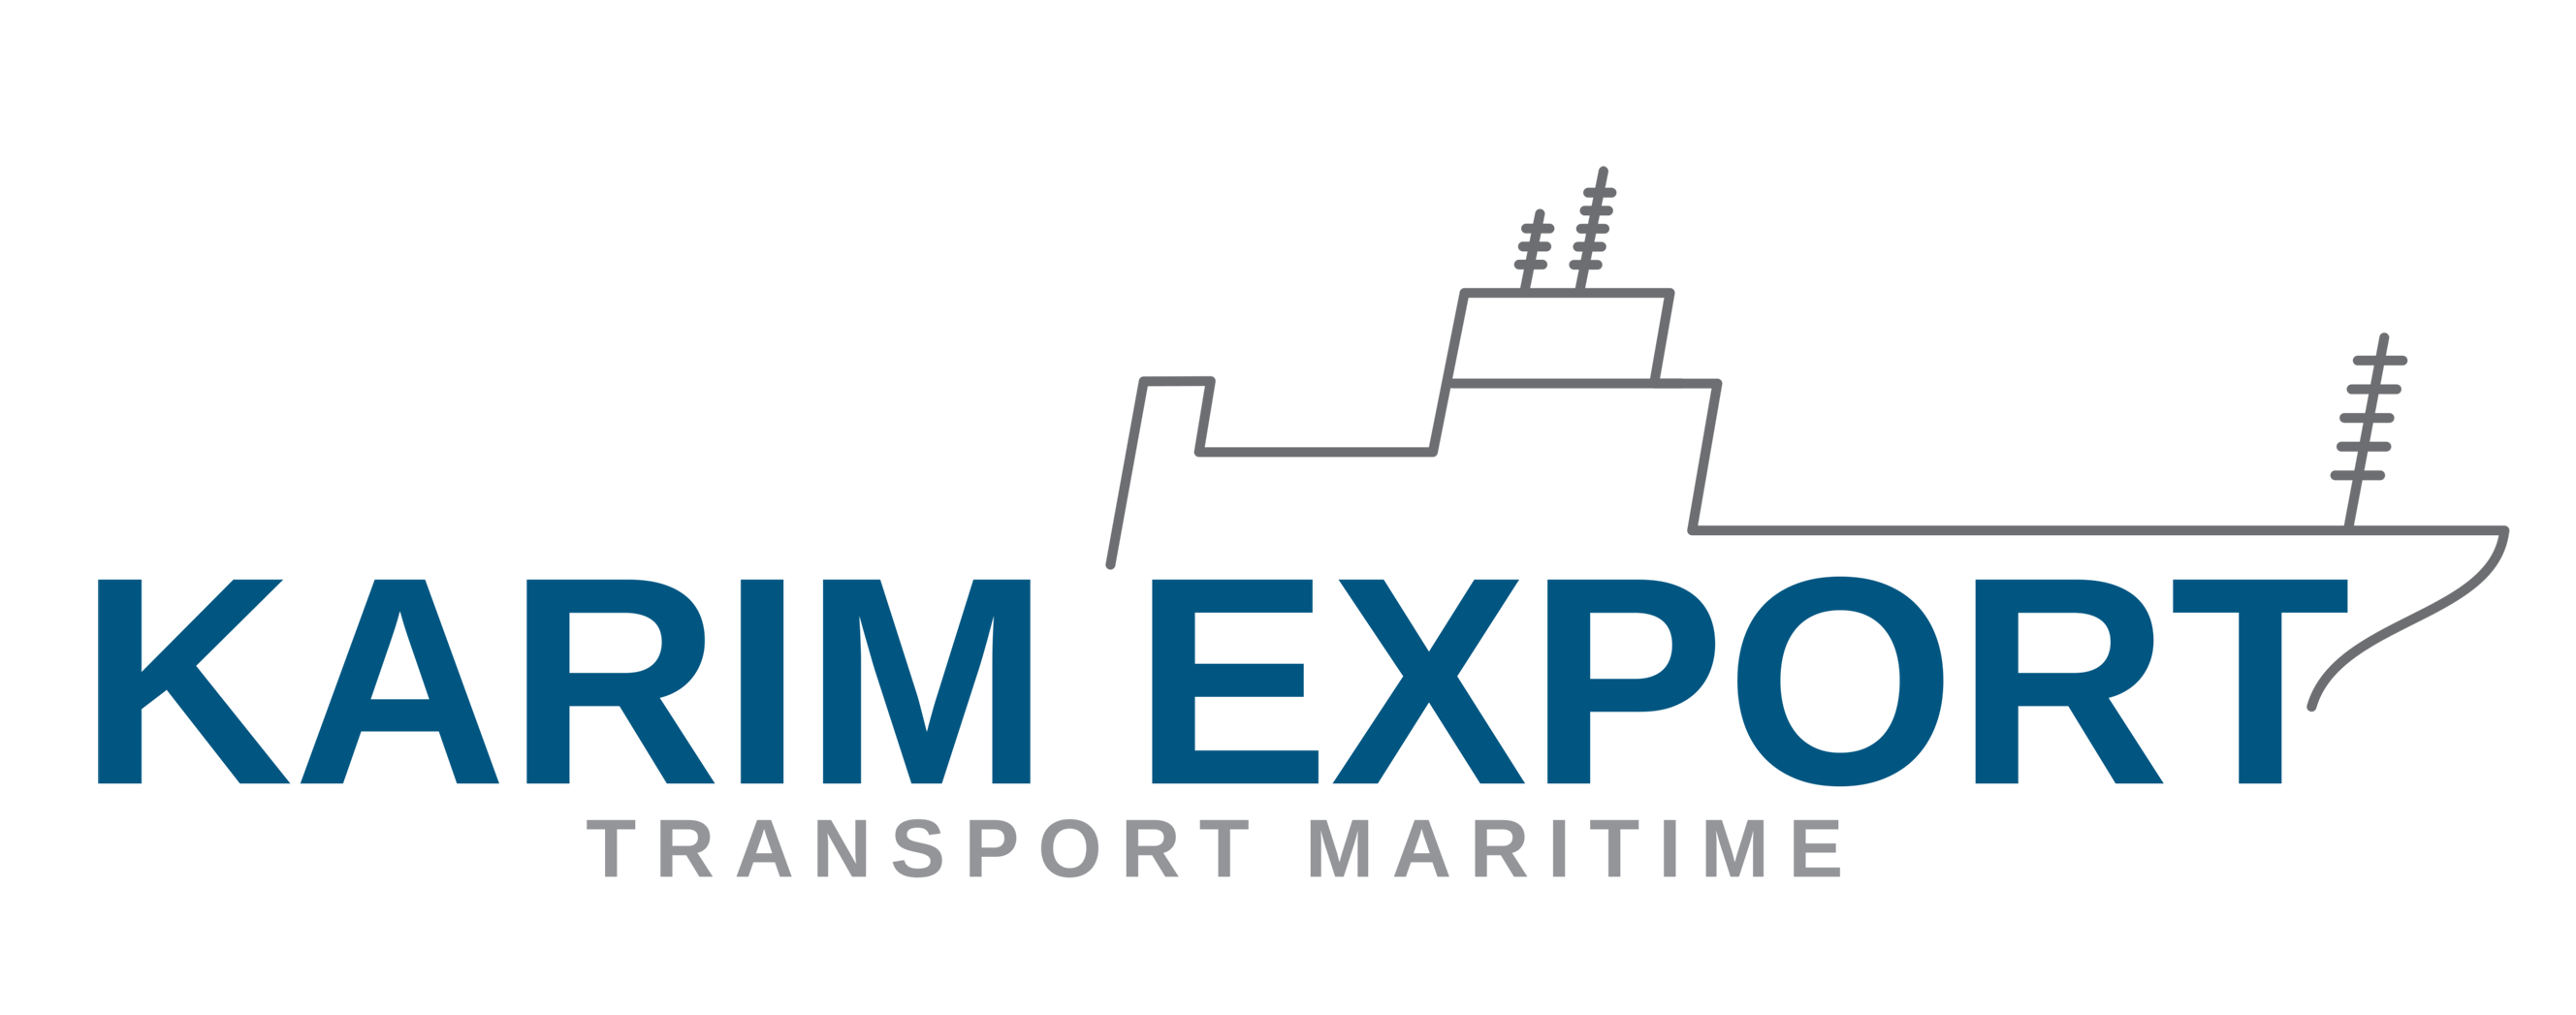 karim export logo